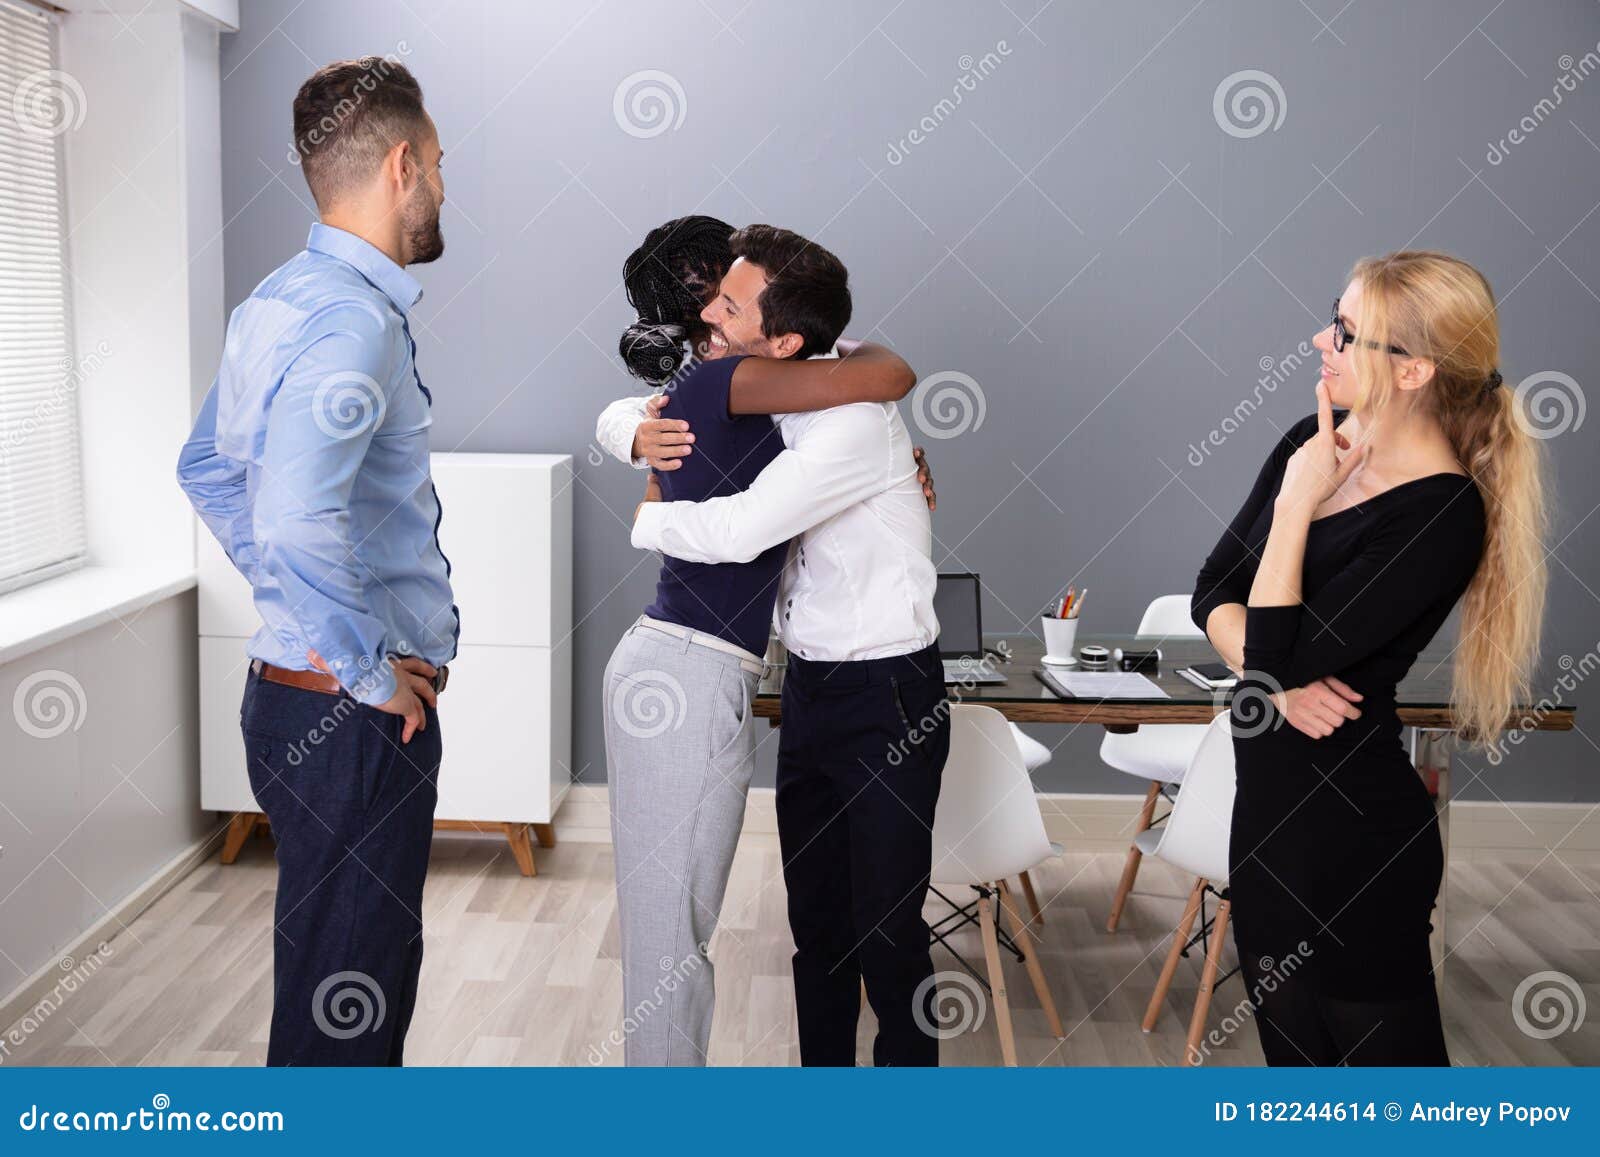 female employee hugging embracing happy coworker